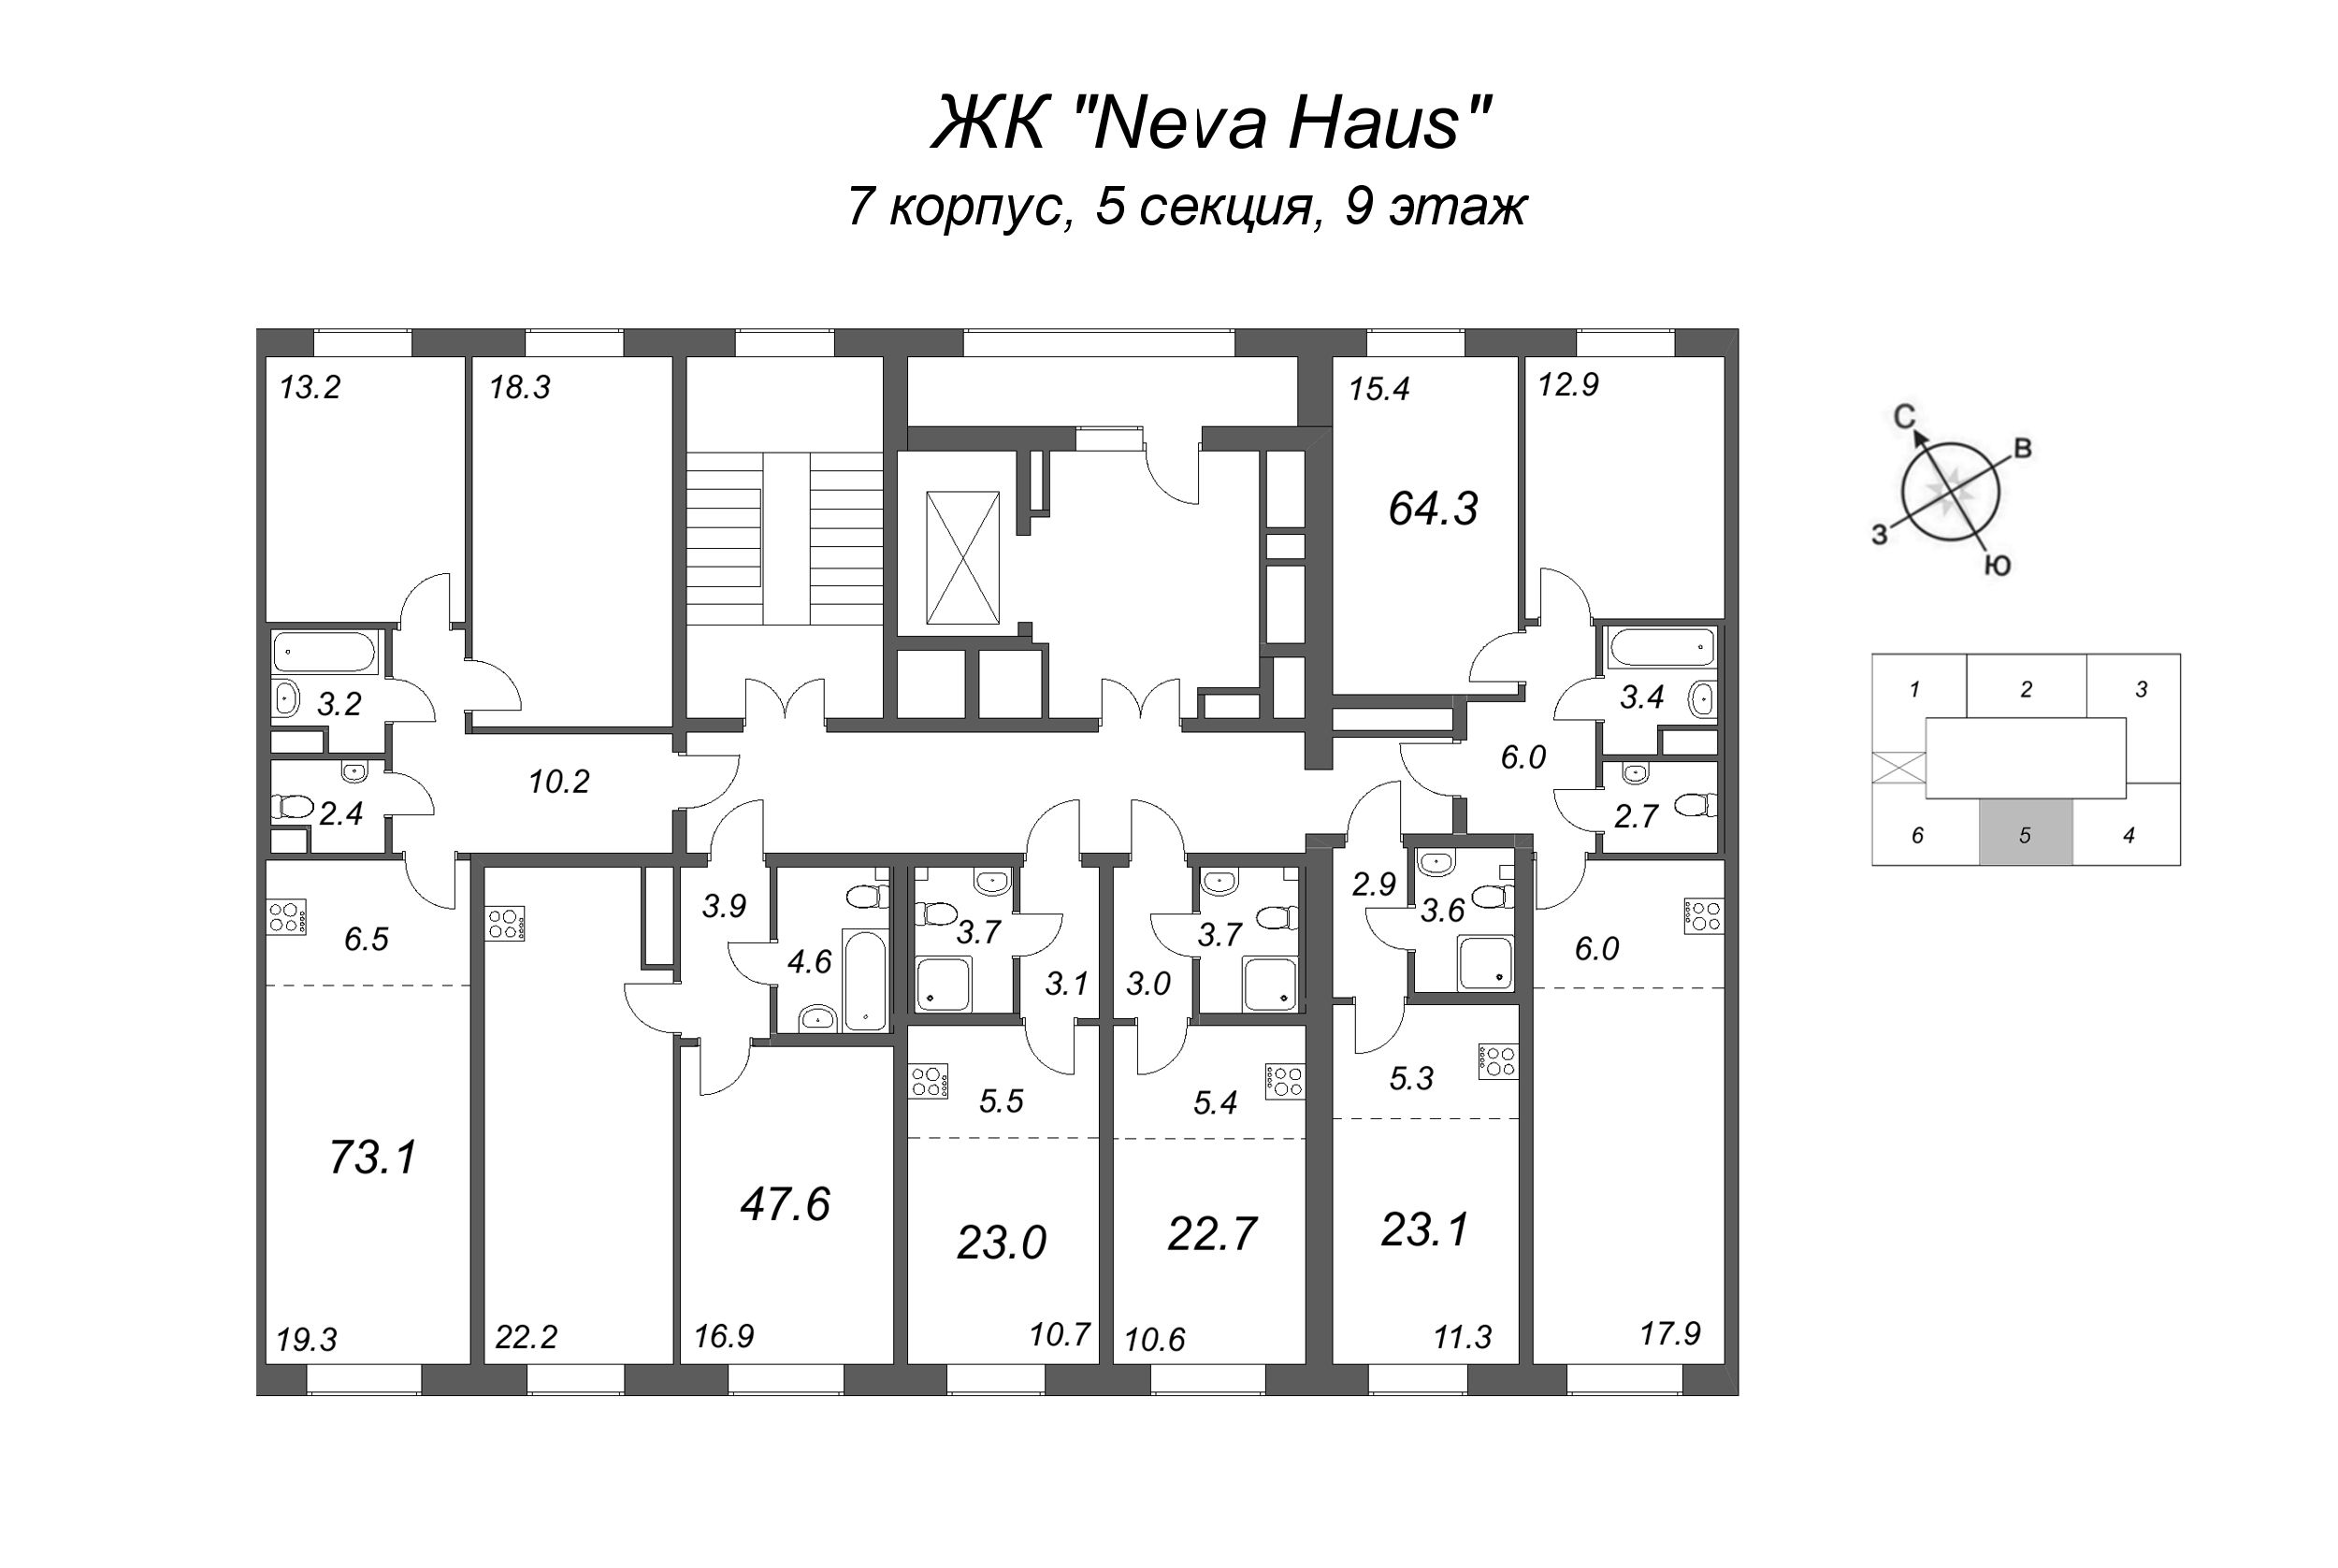 2-комнатная (Евро) квартира, 47.4 м² - планировка этажа